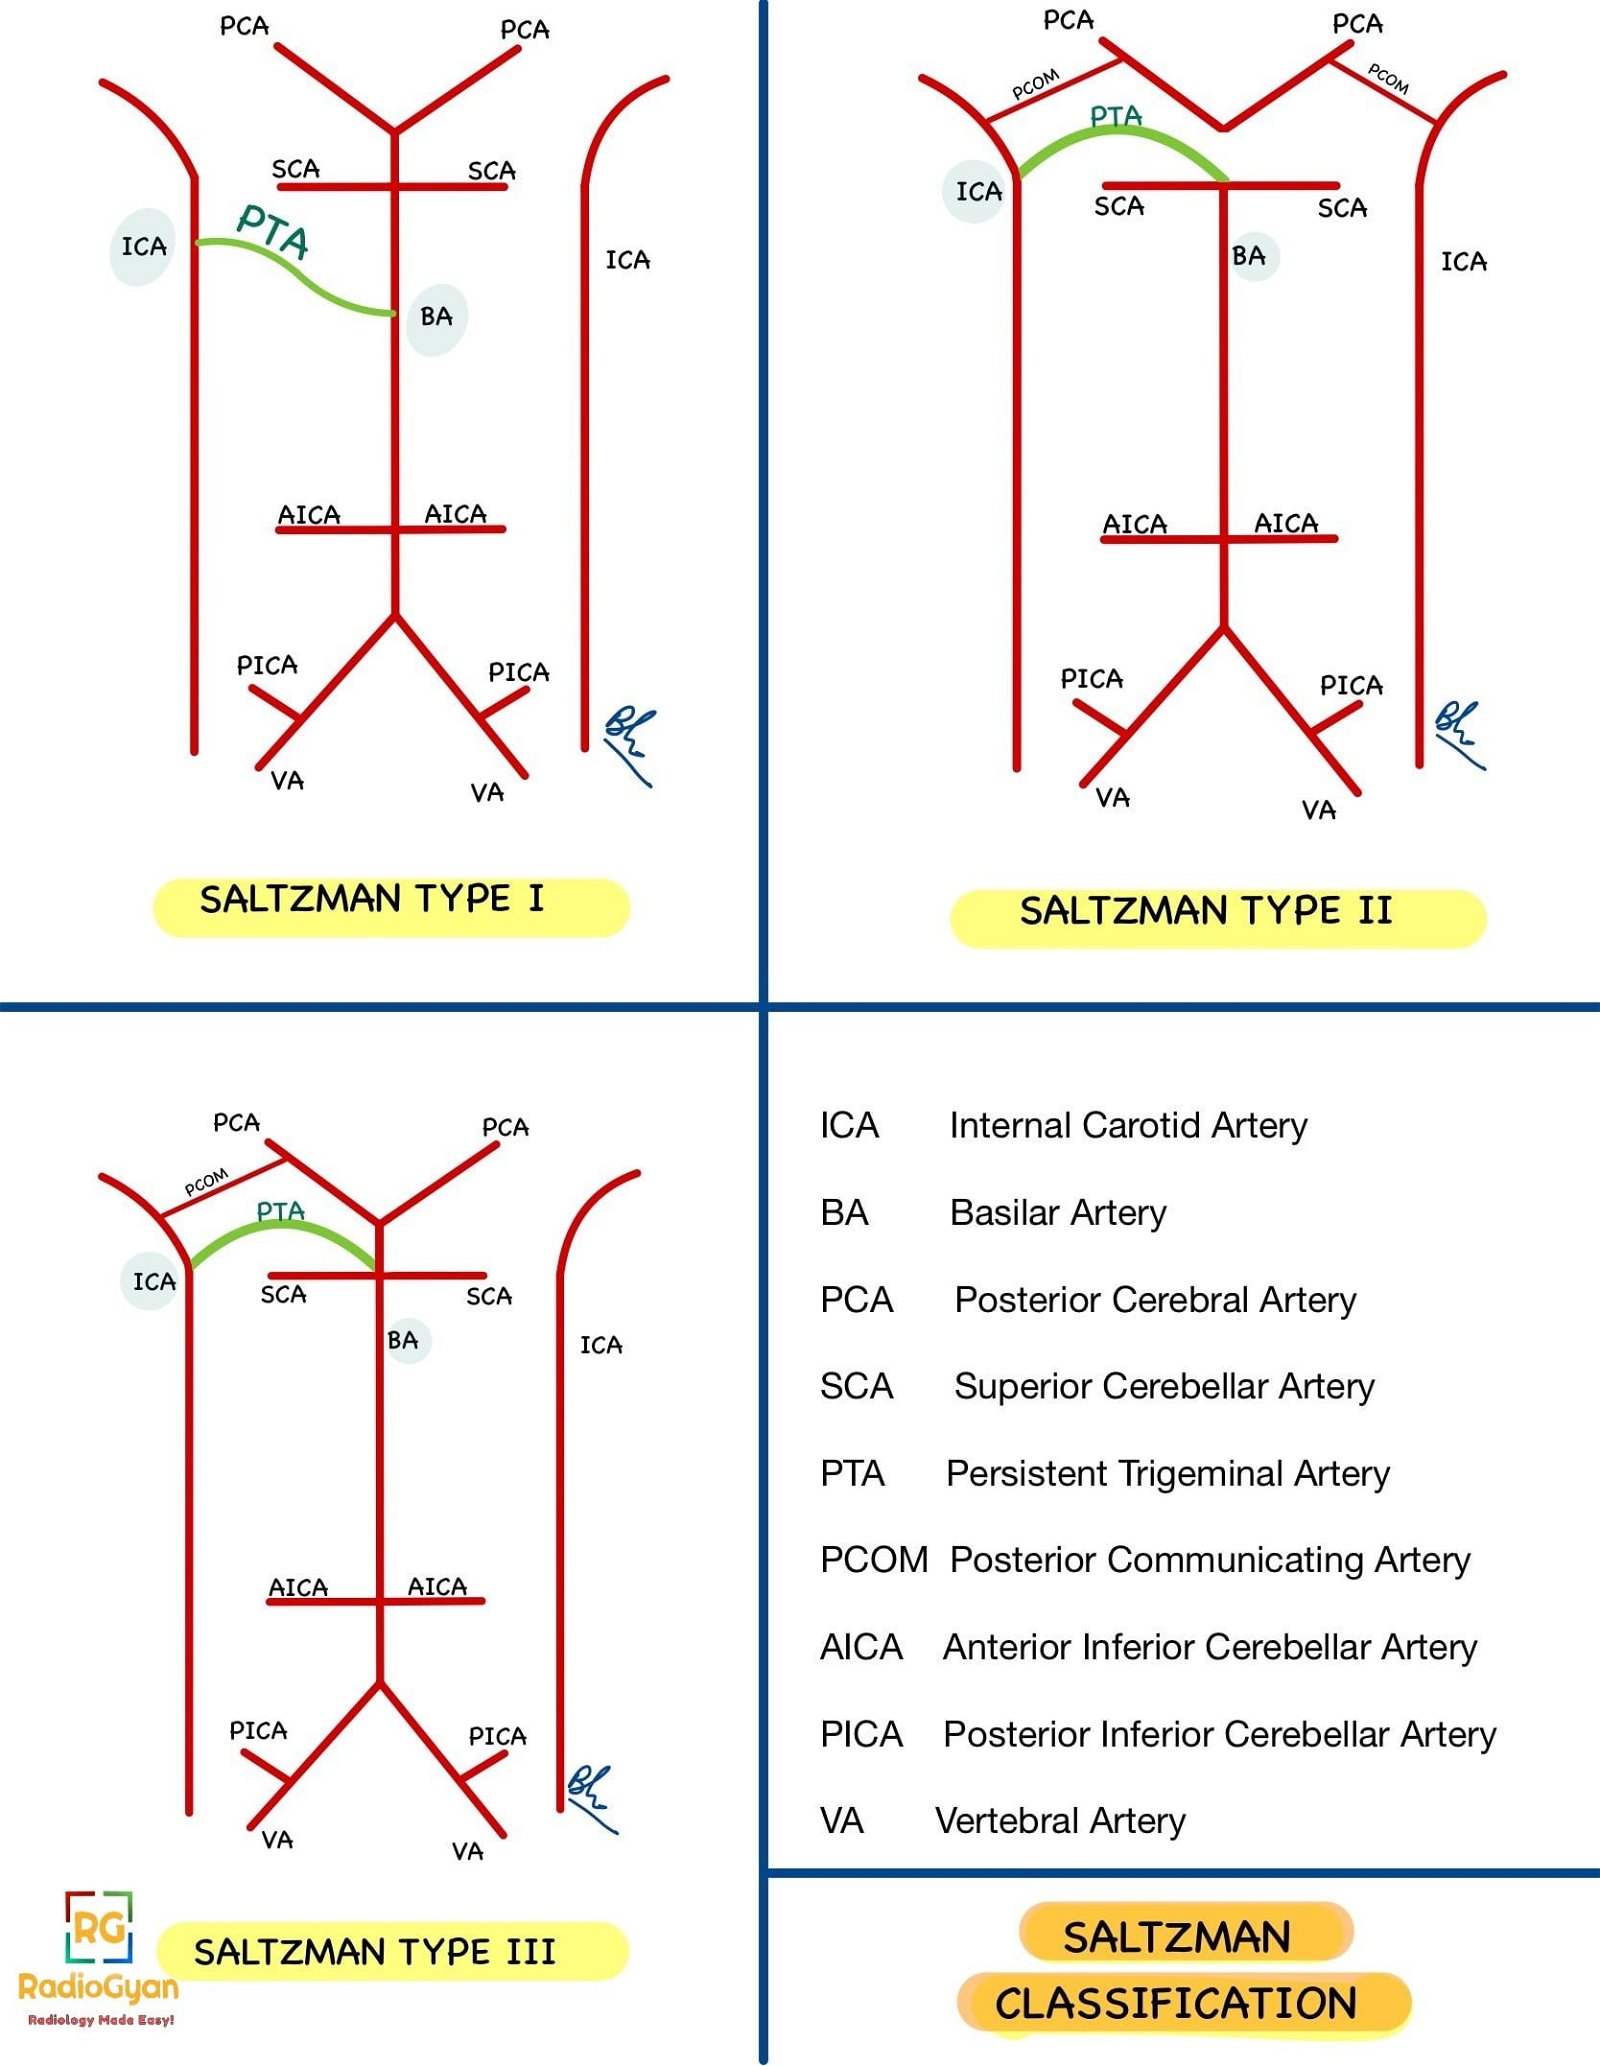 Saltzman Classification System for persistent carotid-vertebrobasilar anastomoses